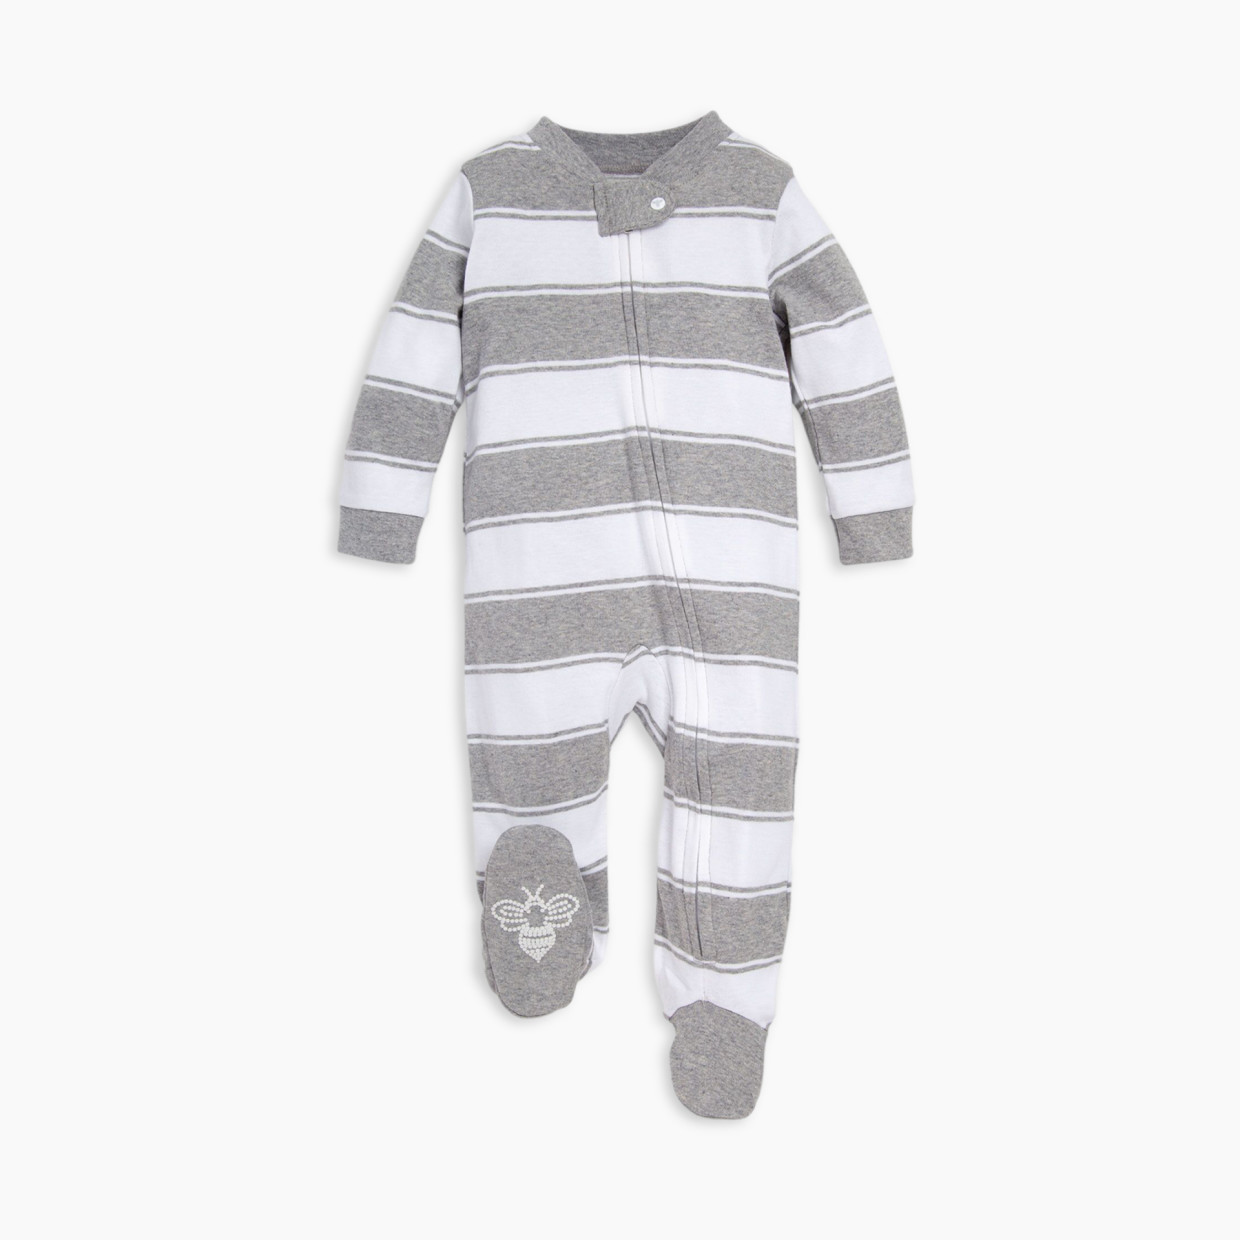 Burt's Bees Baby Organic Sleep & Play Footie Pajamas - Heather Grey Rugby  Peace Stripe, 6-9 Months